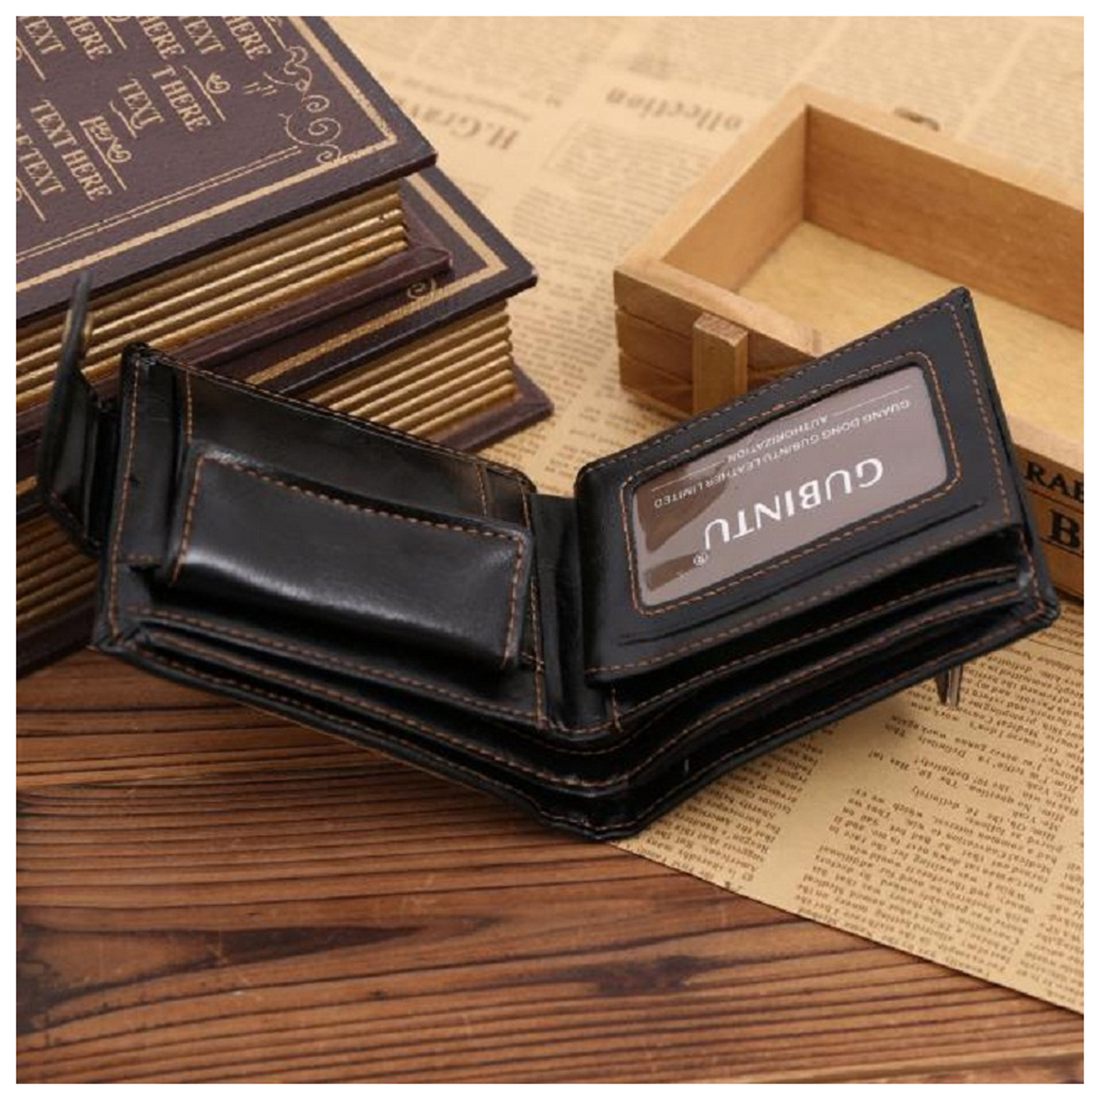 Gubintu Men's New Fashion High Quality Mini Zipper Wallet Male Pu Leather Card Cash Receipt Bags Holder Boys Clutch Purse - ebowsos